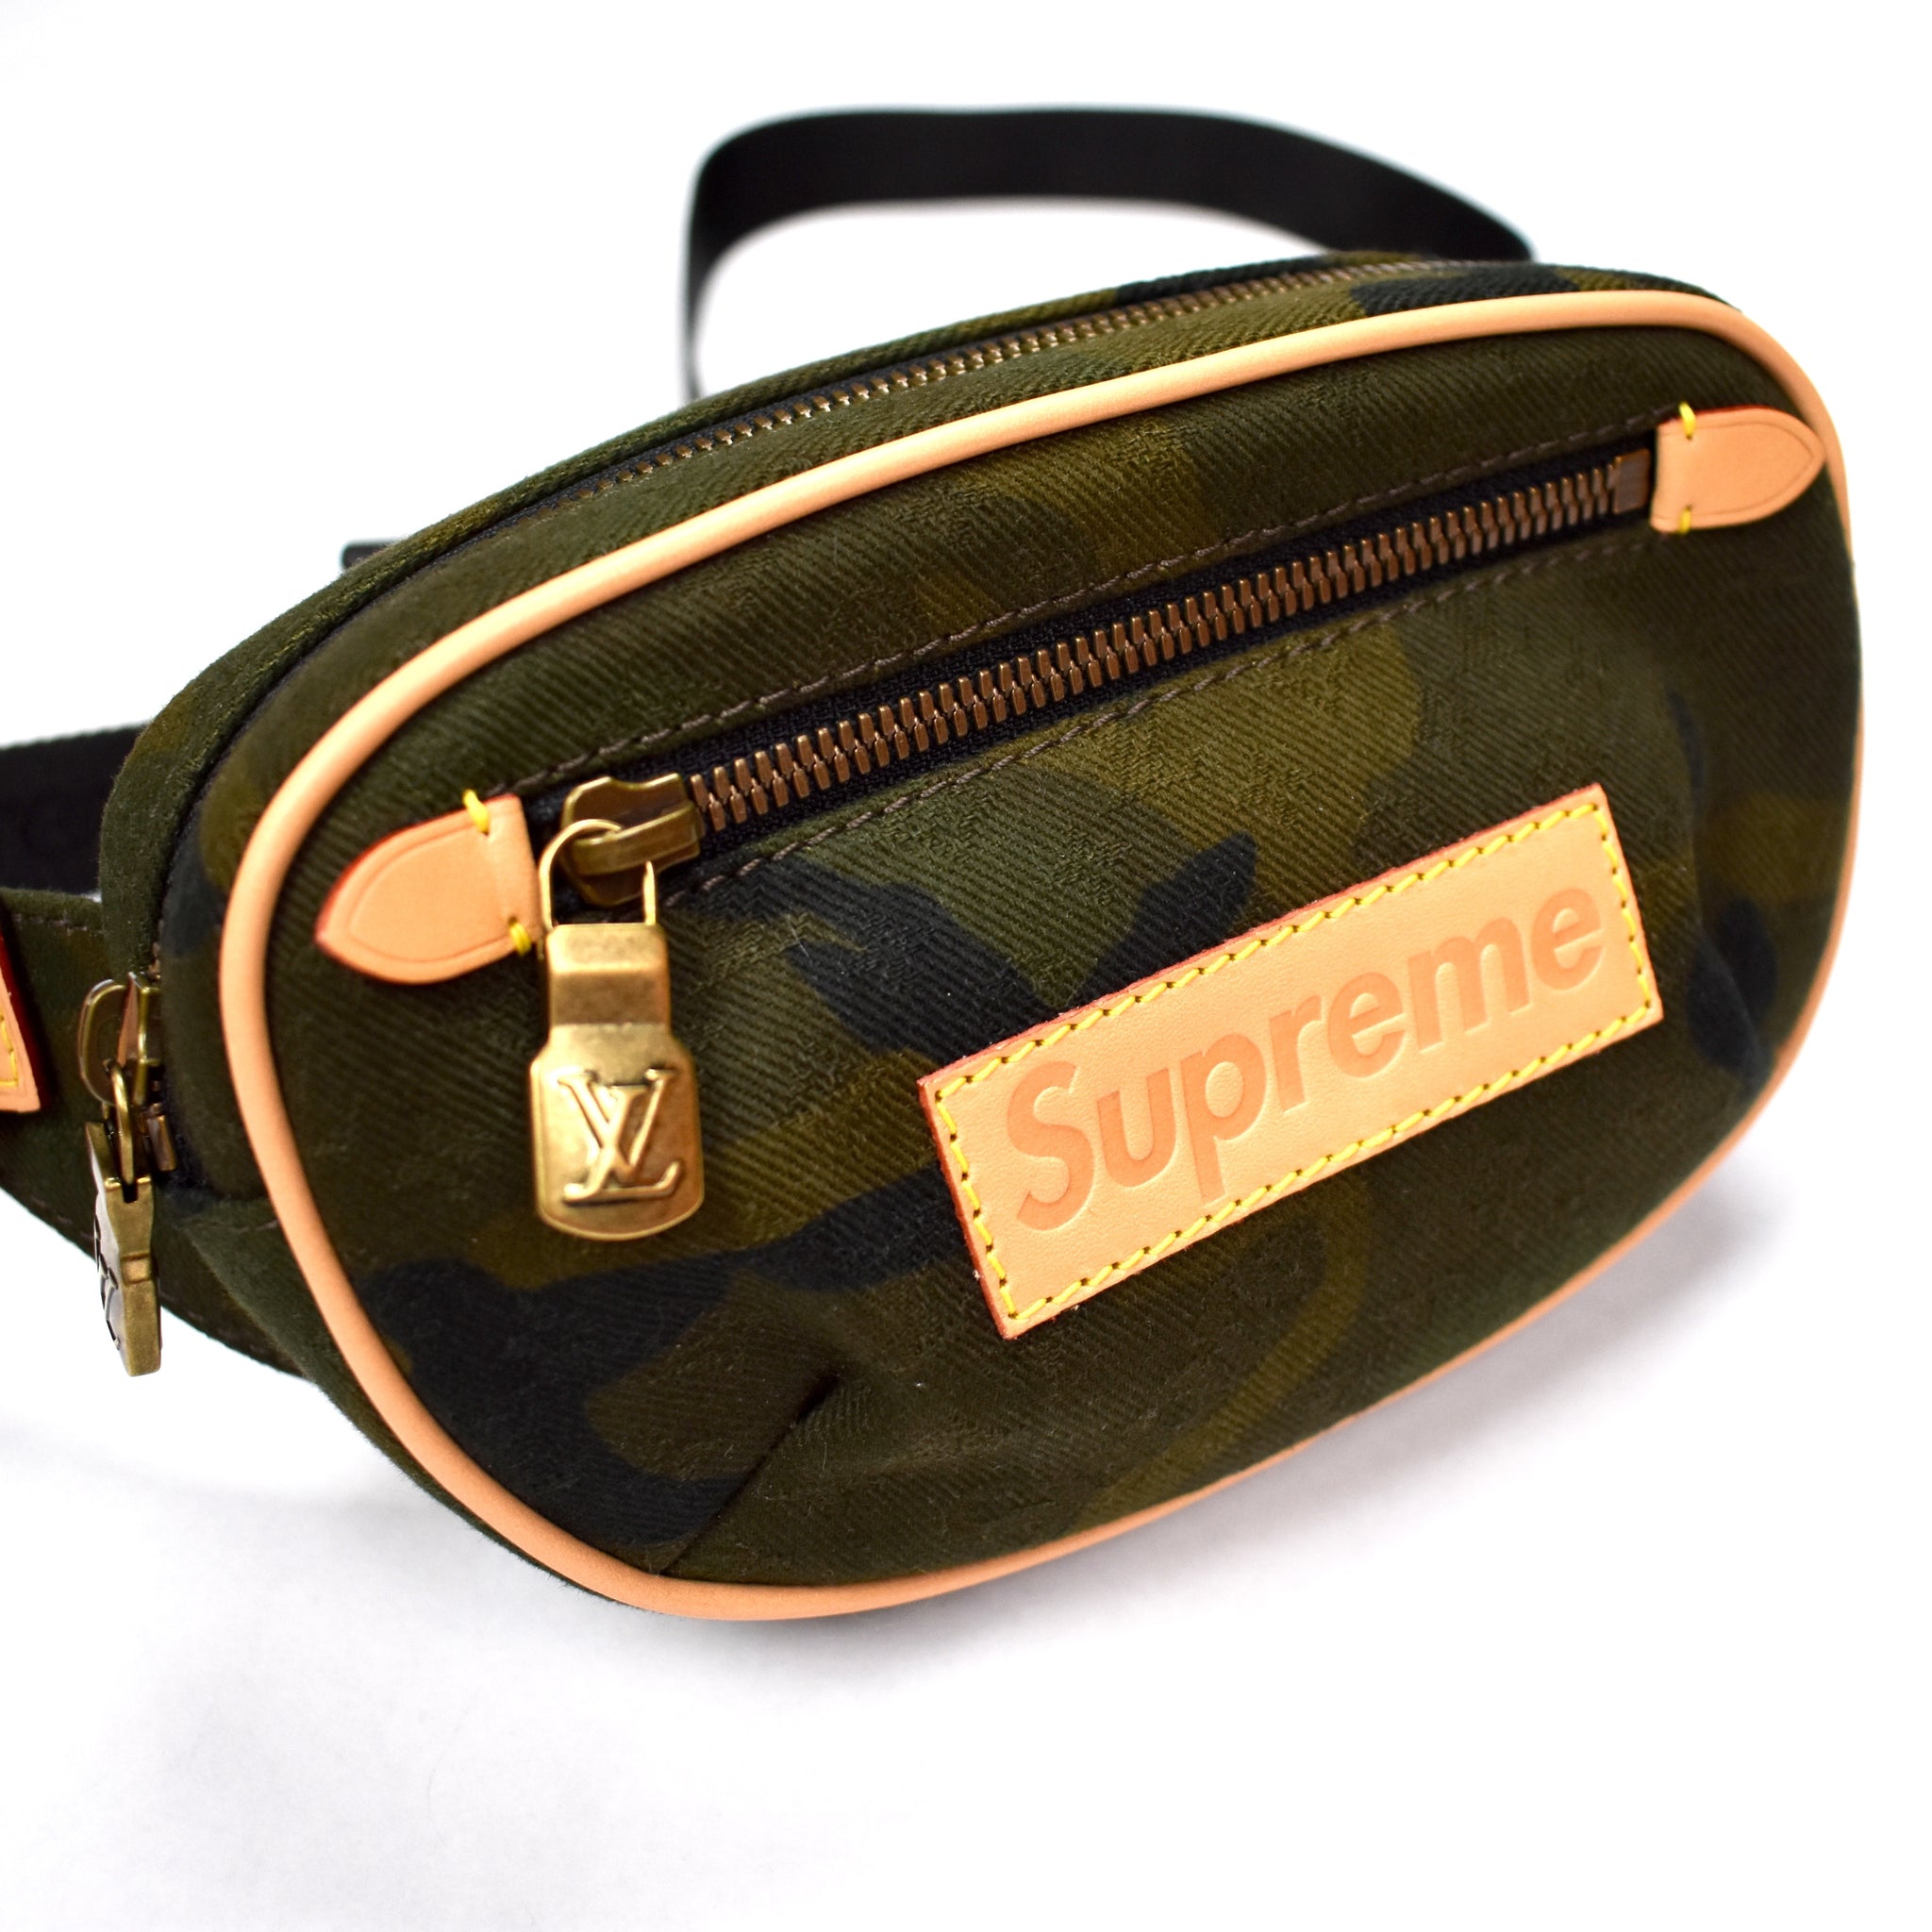 Lv Supreme Bum Bag Price | SEMA Data Co-op